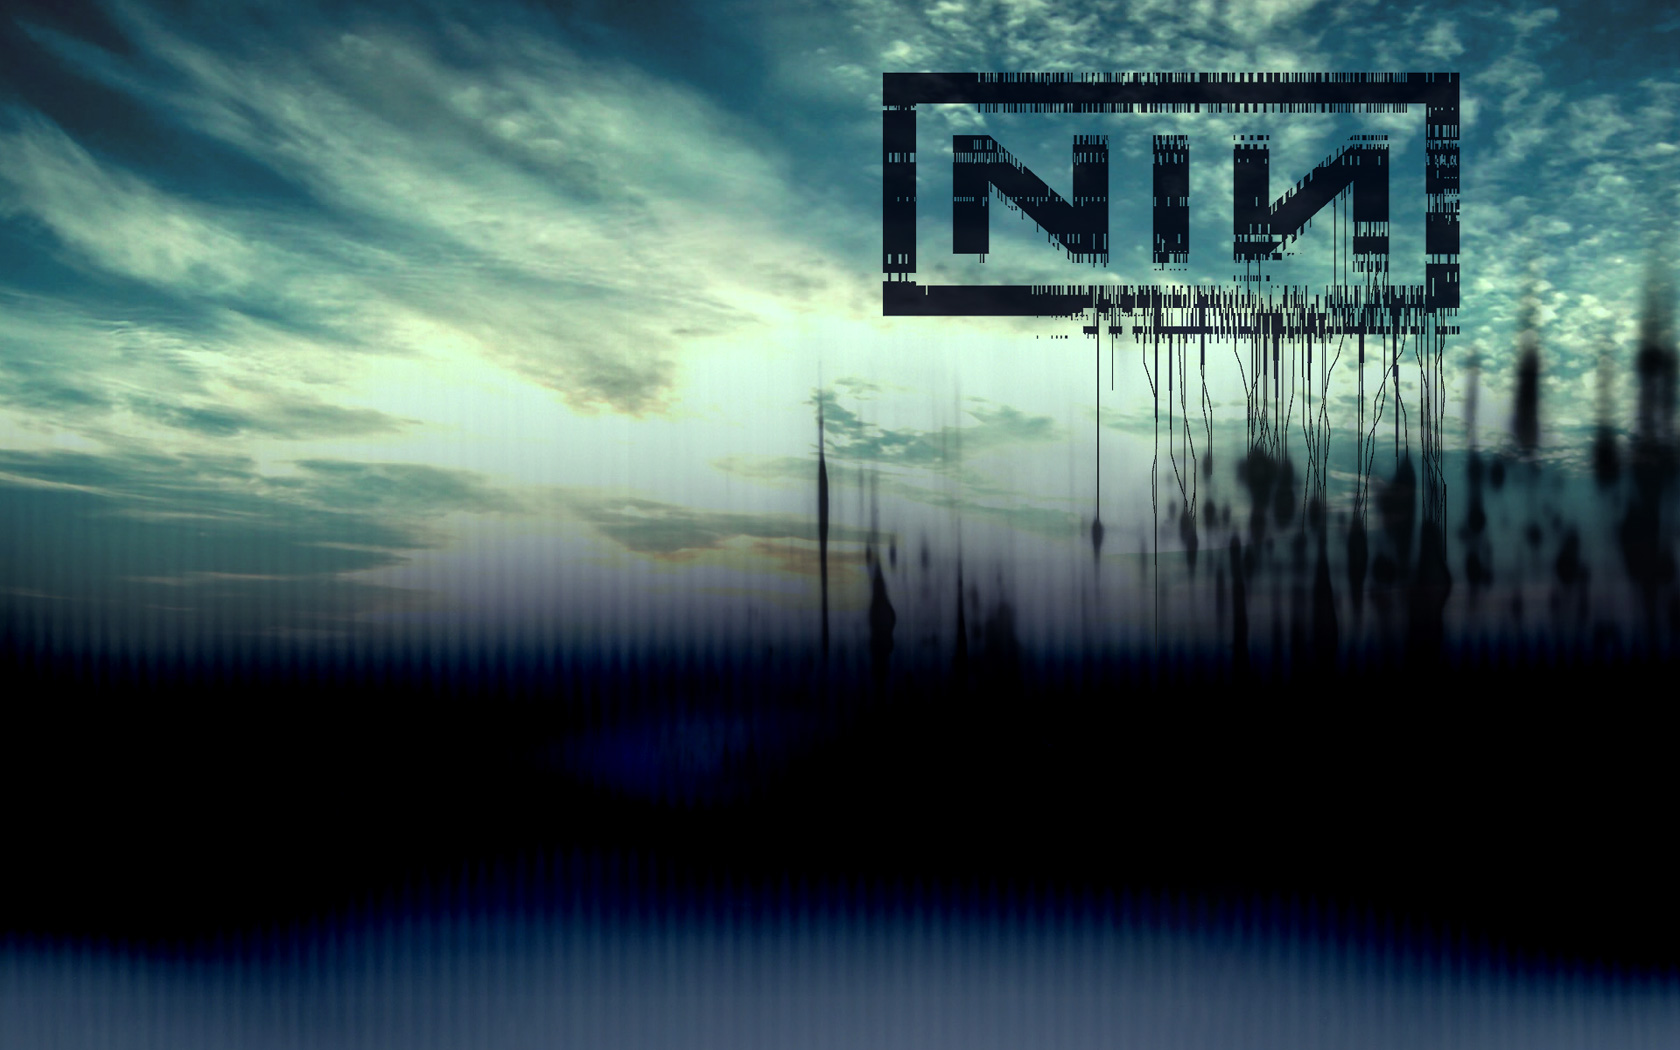 Lights in the Sky - Nine Inch Nails Wallpaper (27520110) - Fanpop